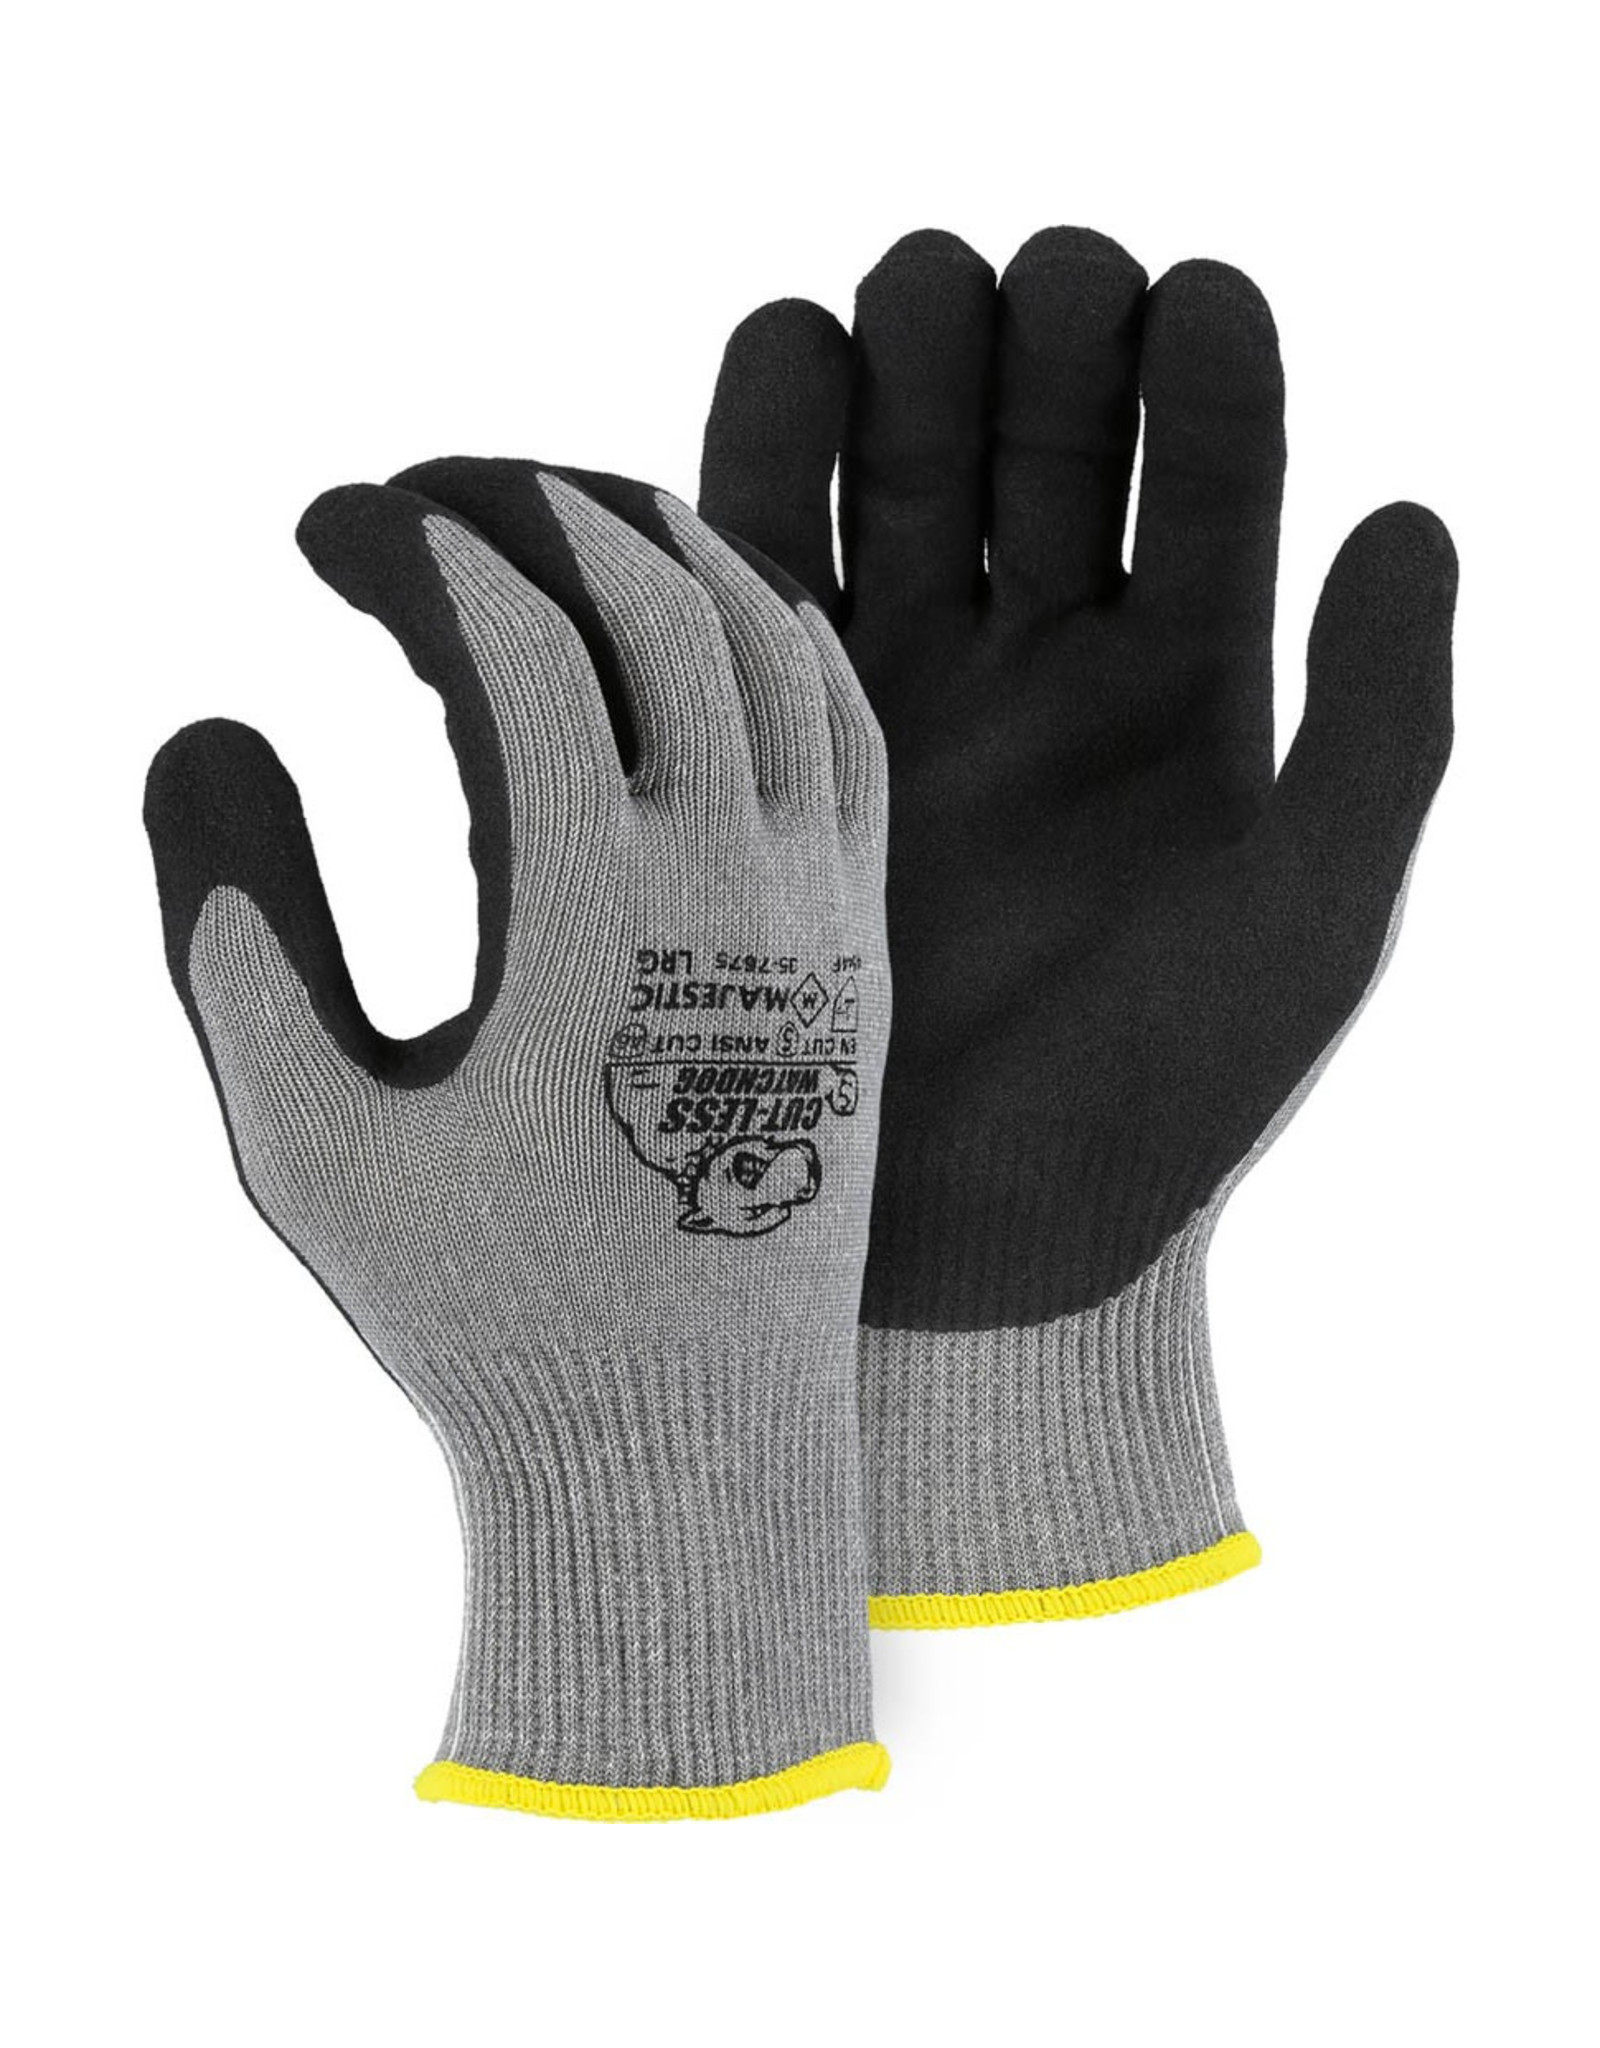 Majestic Glove Cut-Less Watchdog Glove with Sandy Nitrile Palm